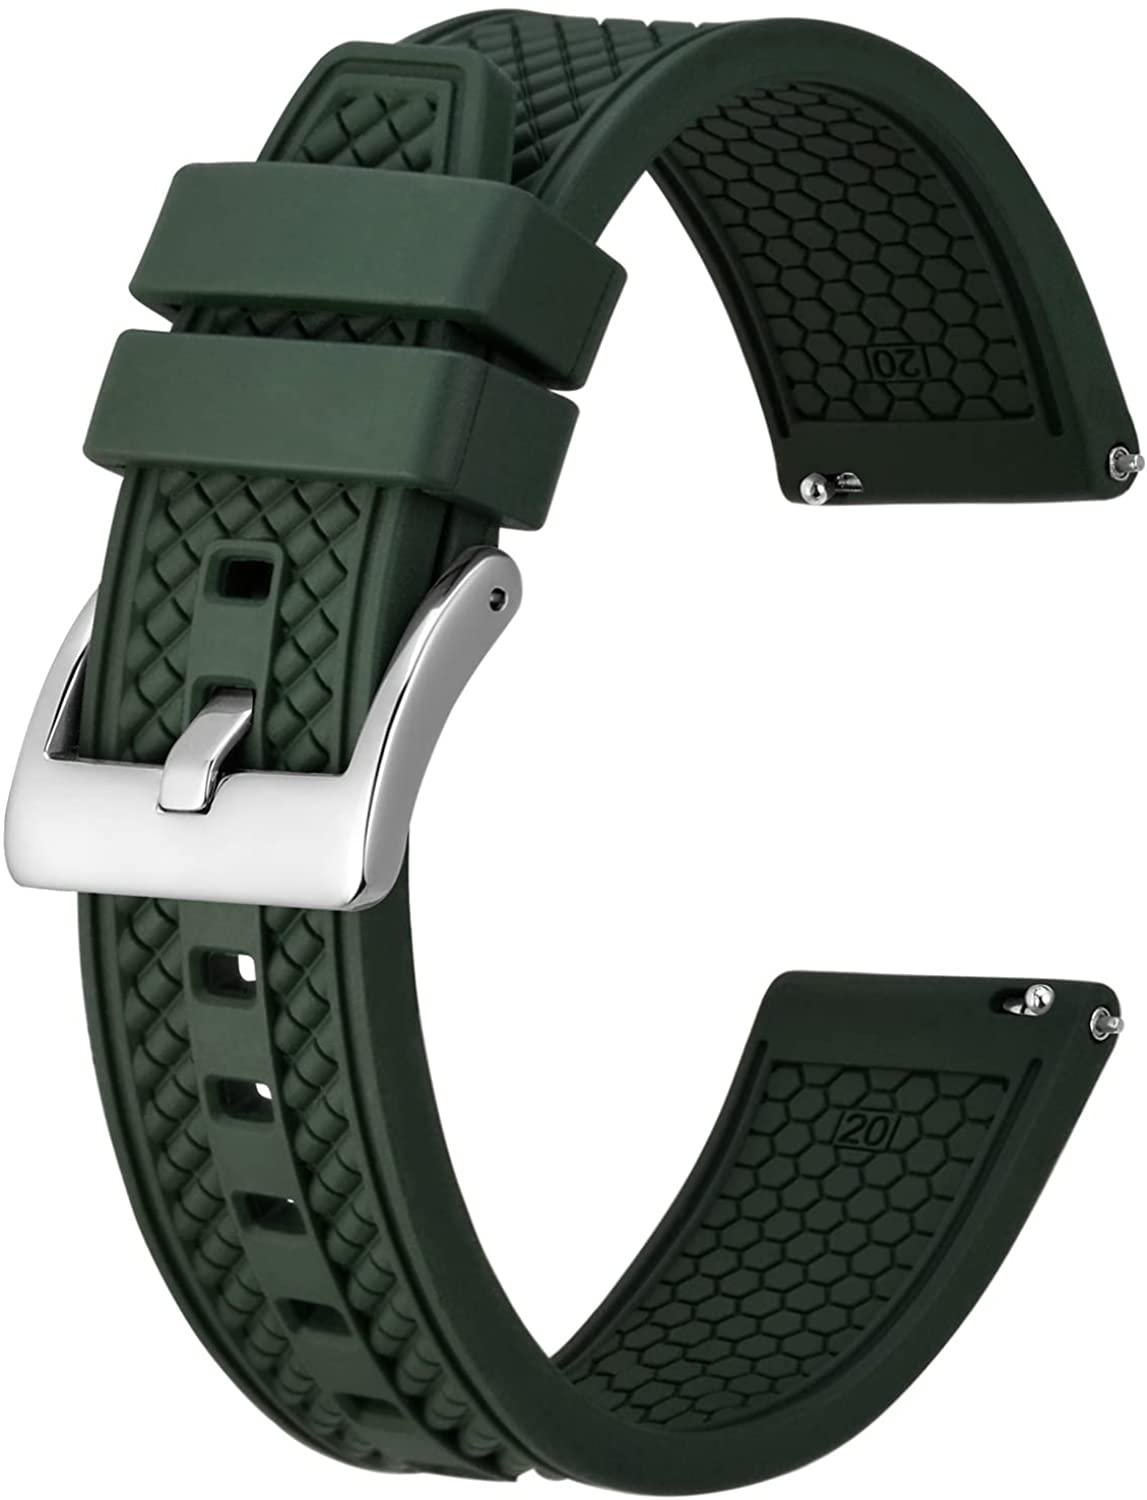 Green Bands - Handley Watches